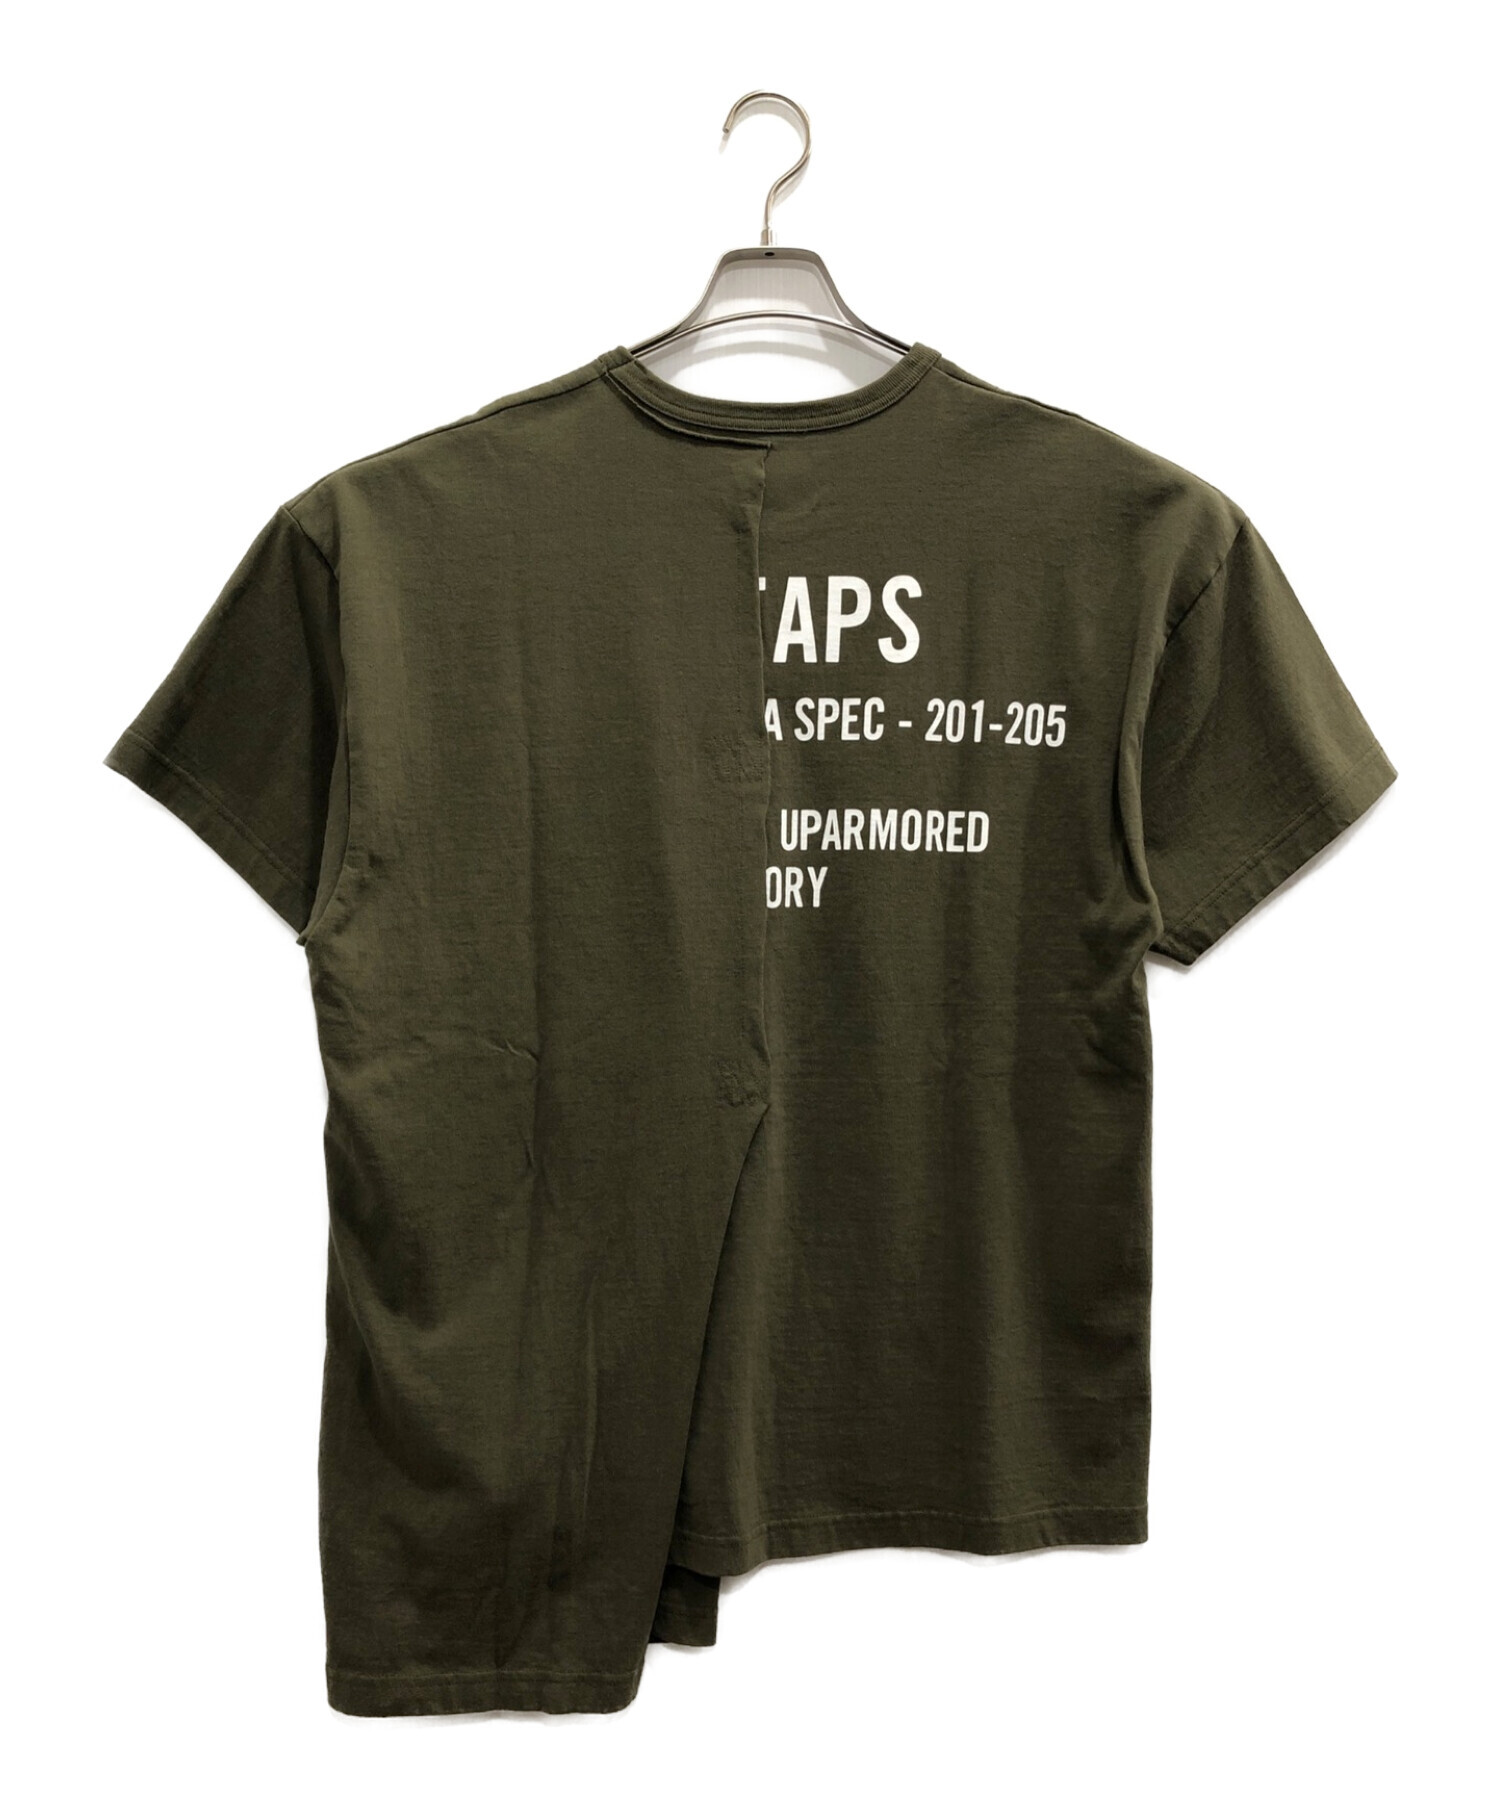 WTAPS (ダブルタップス) 再構築Tシャツ オリーブ サイズ:3